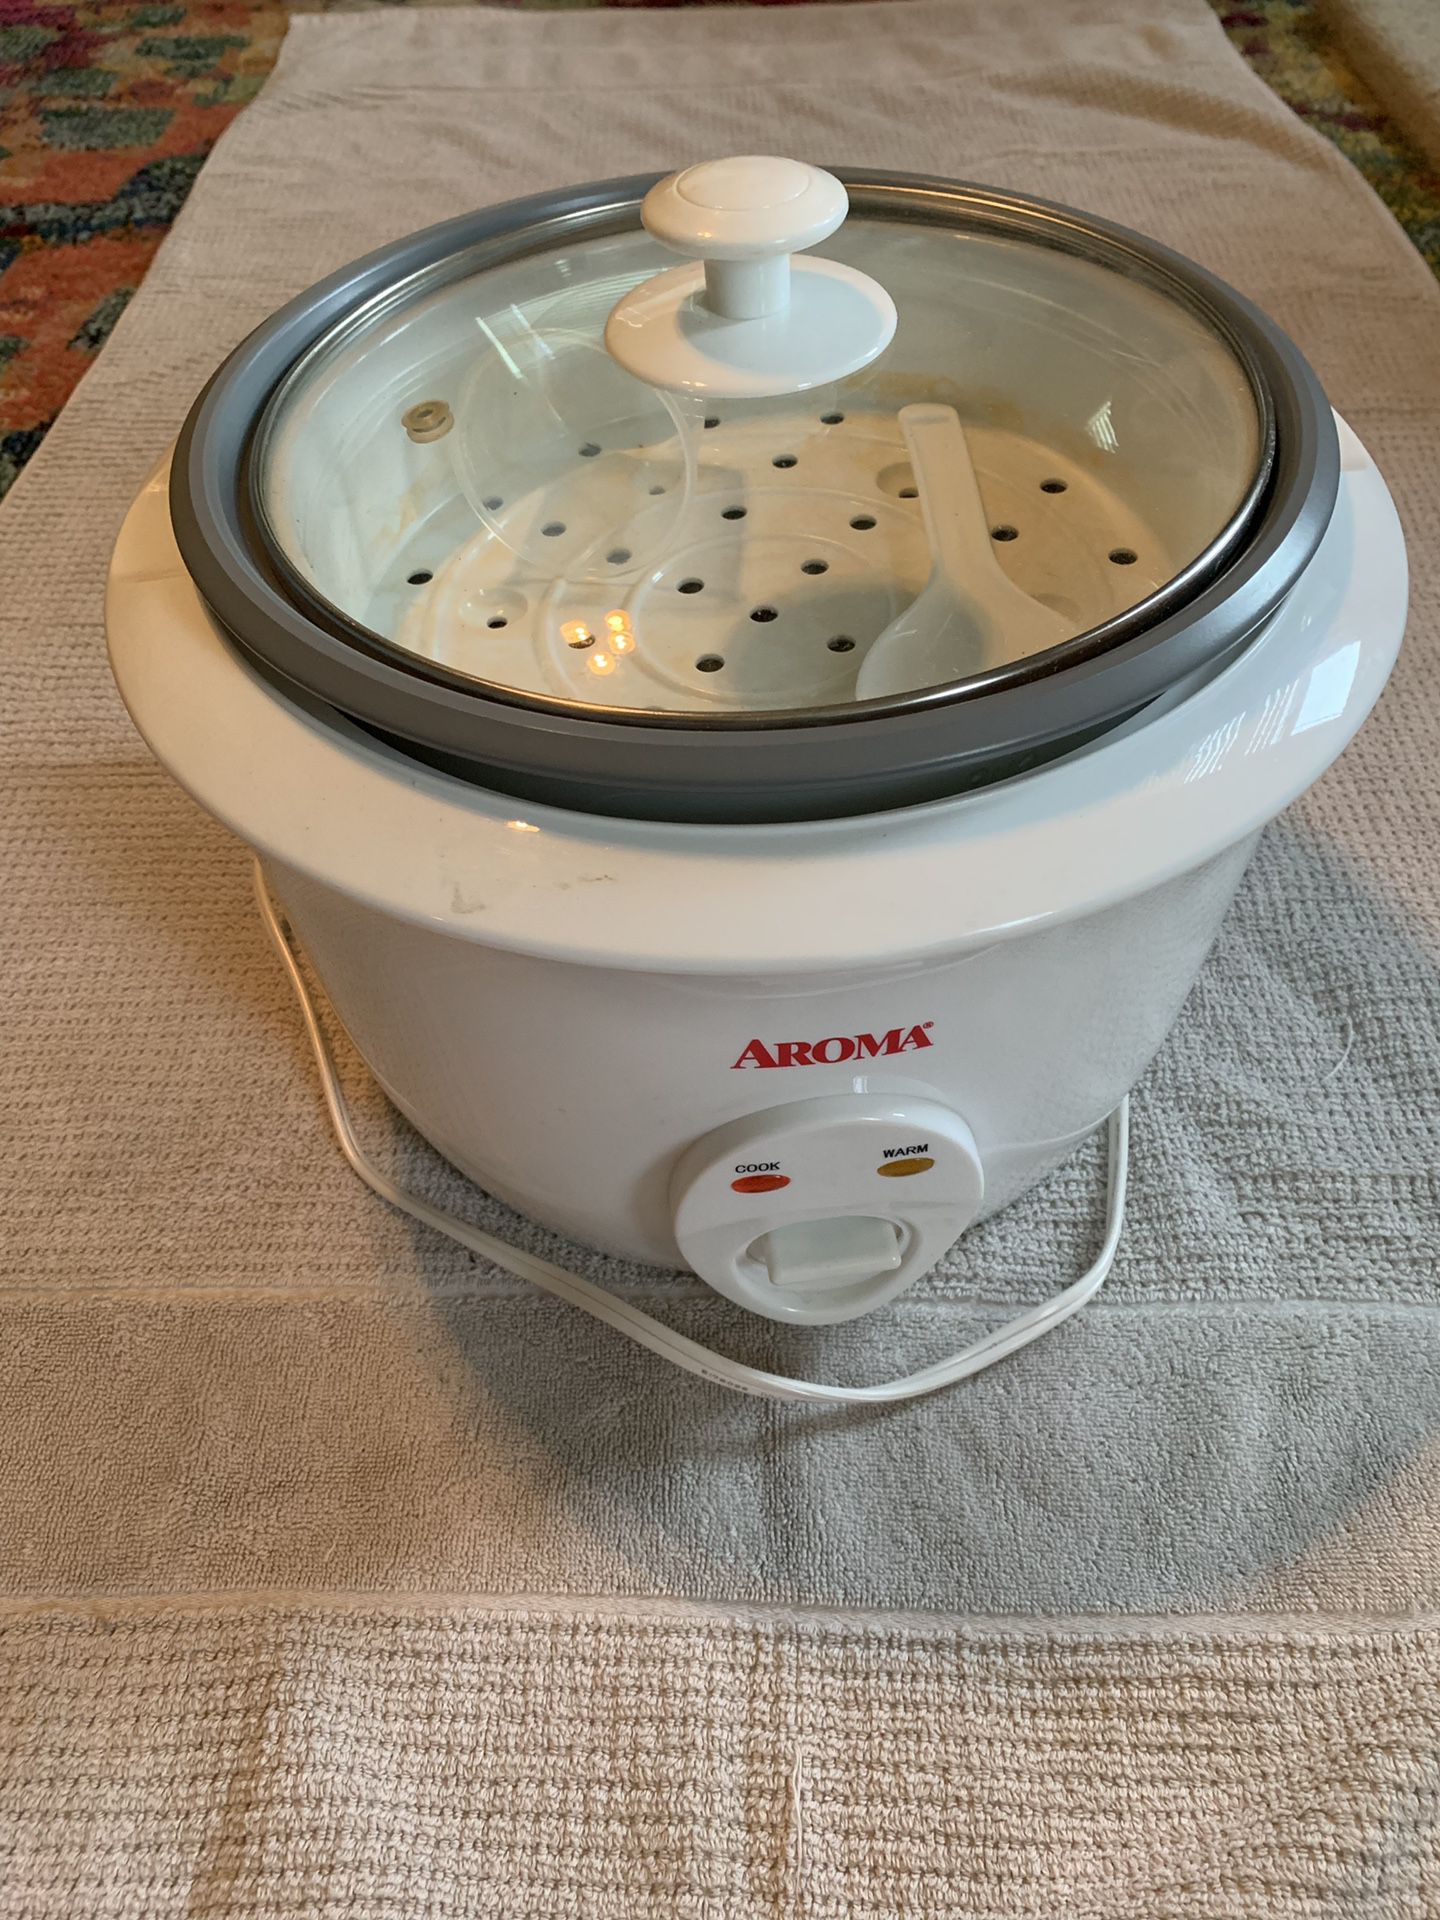 Aroma Rice Cooker/Steamer